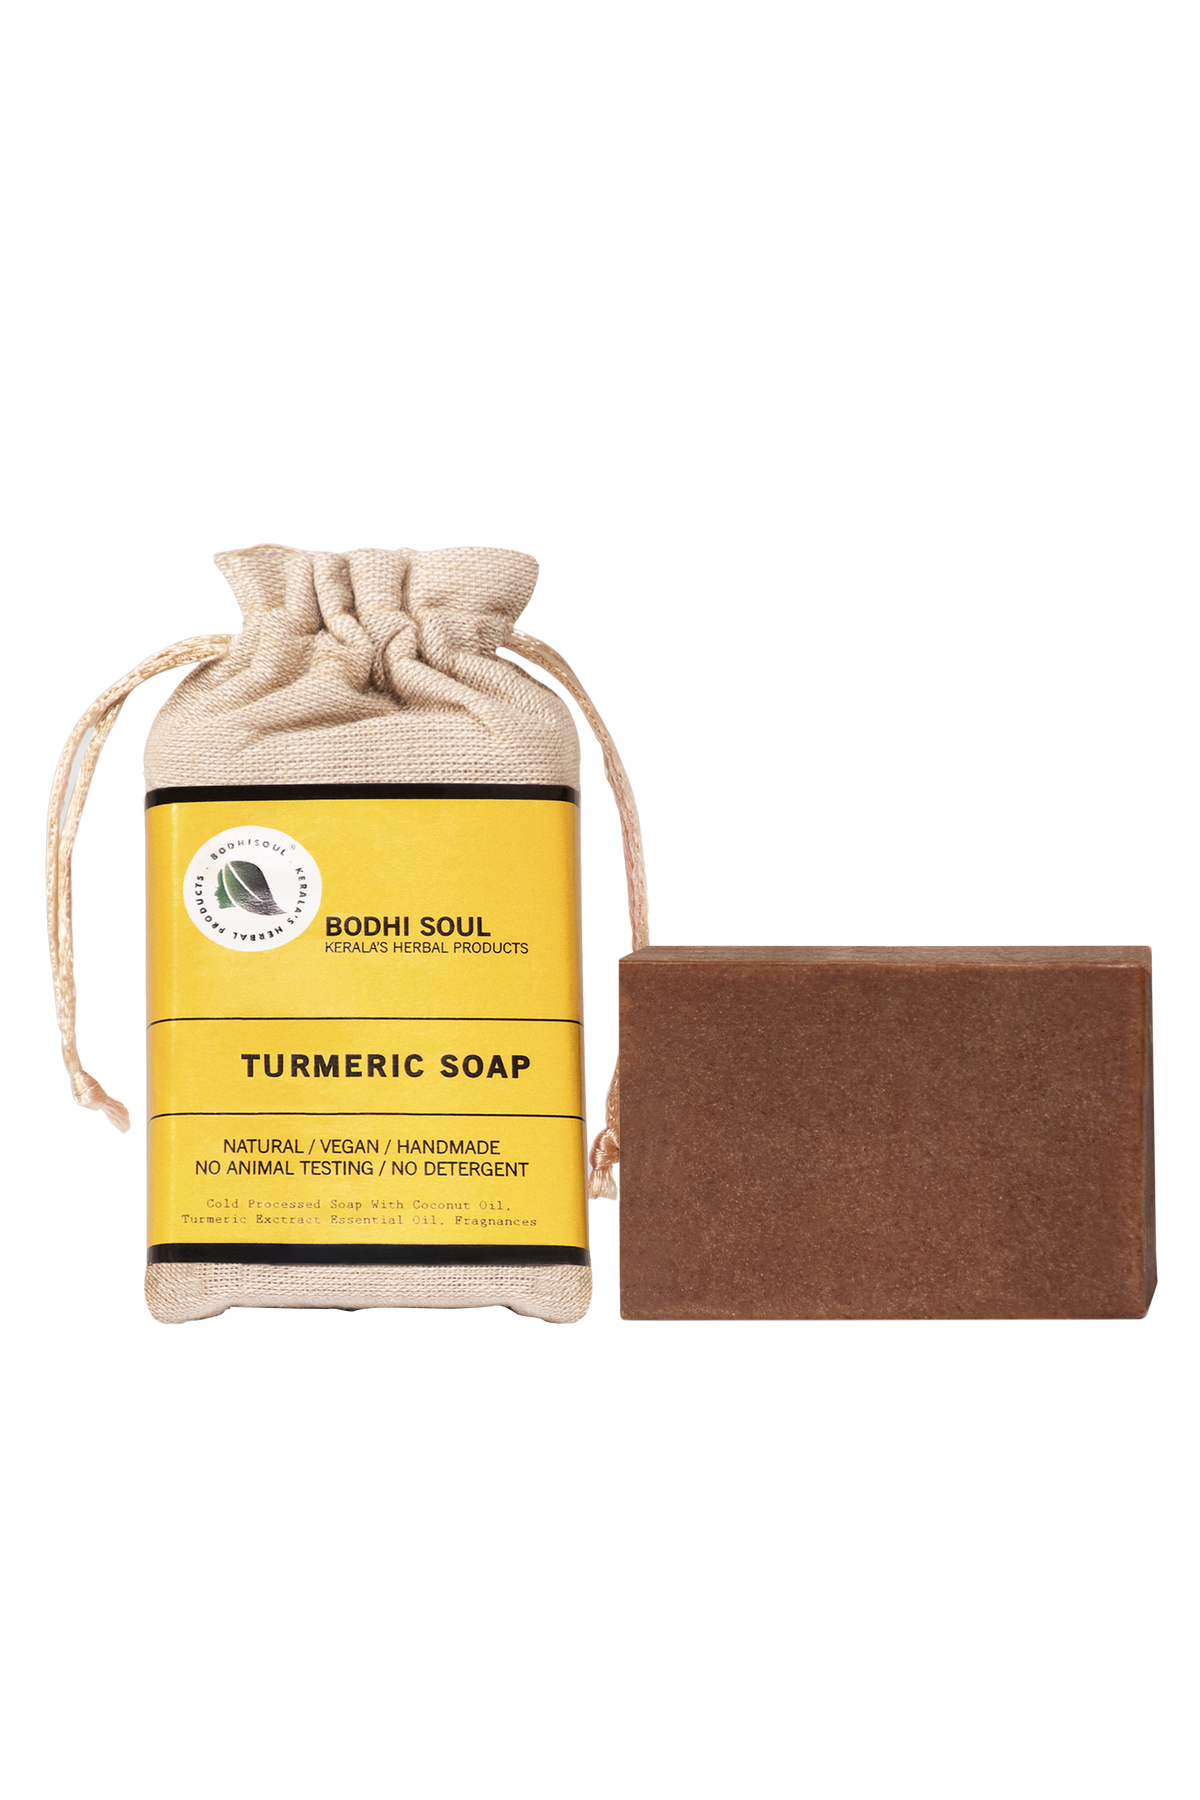  Bodhisoul Turmeric Soap